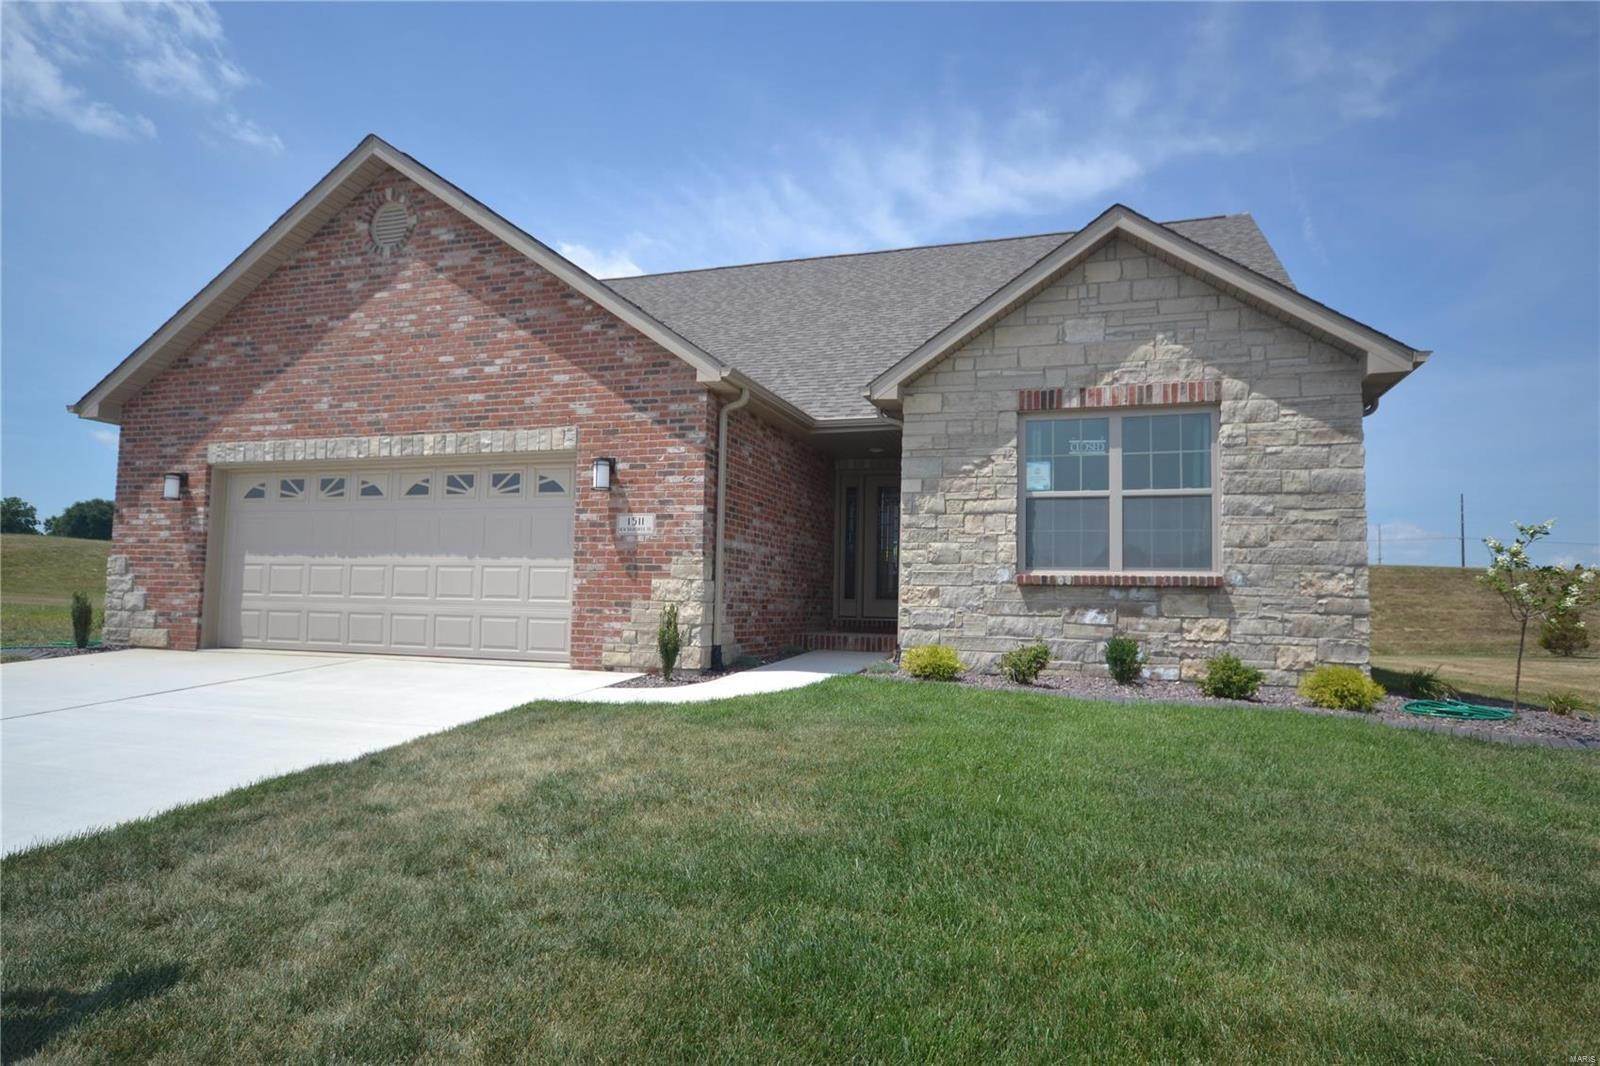 Single Family Homes for Sale at 4416 Tbb Devin Drive Smithton, Illinois 62285 United States